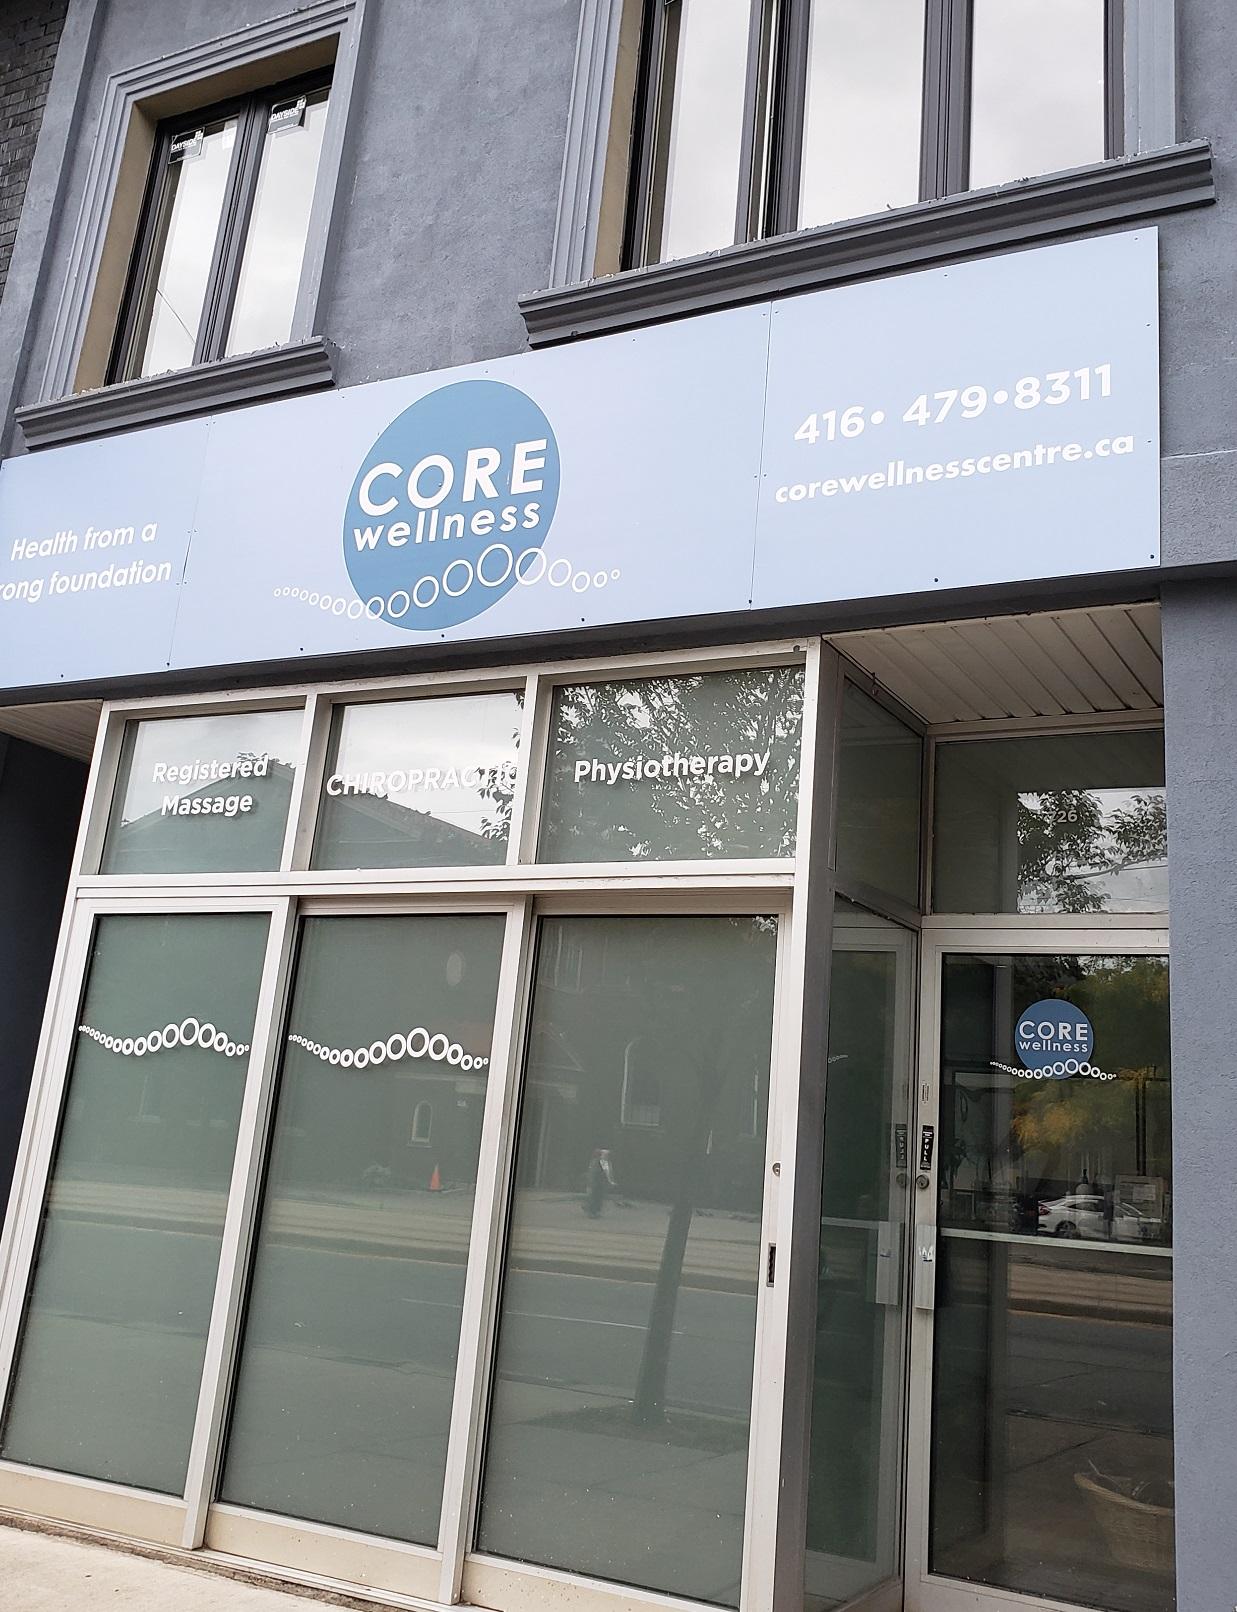 Core Wellness Centre